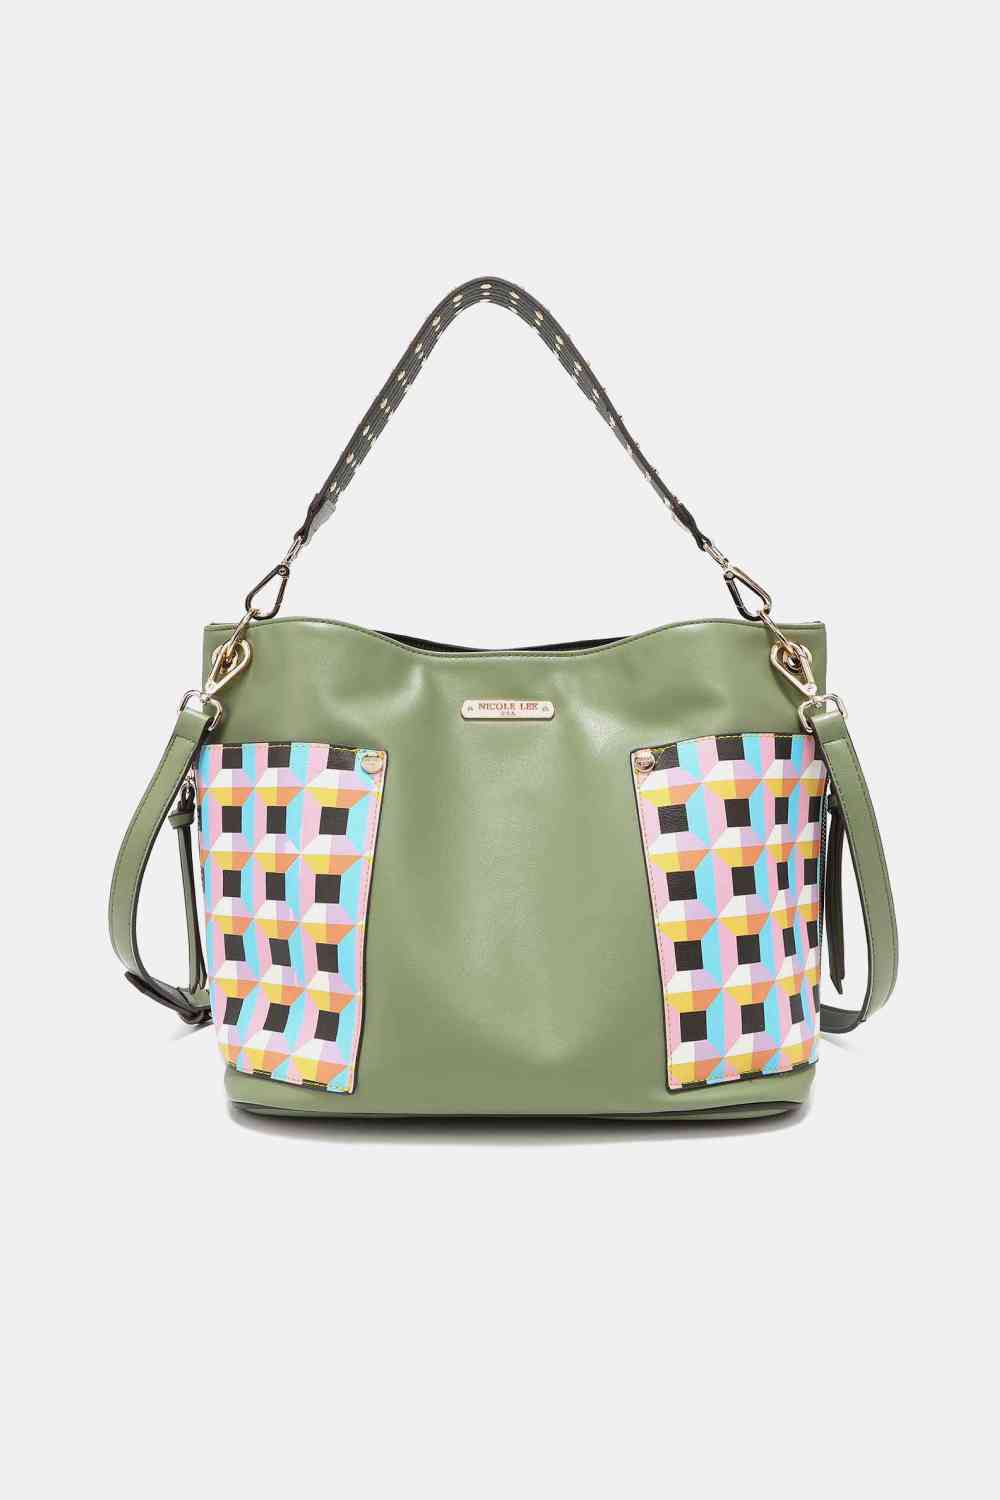 Nicole Lee USA Quihn 3-Piece Handbag Set - BloomBliss.com